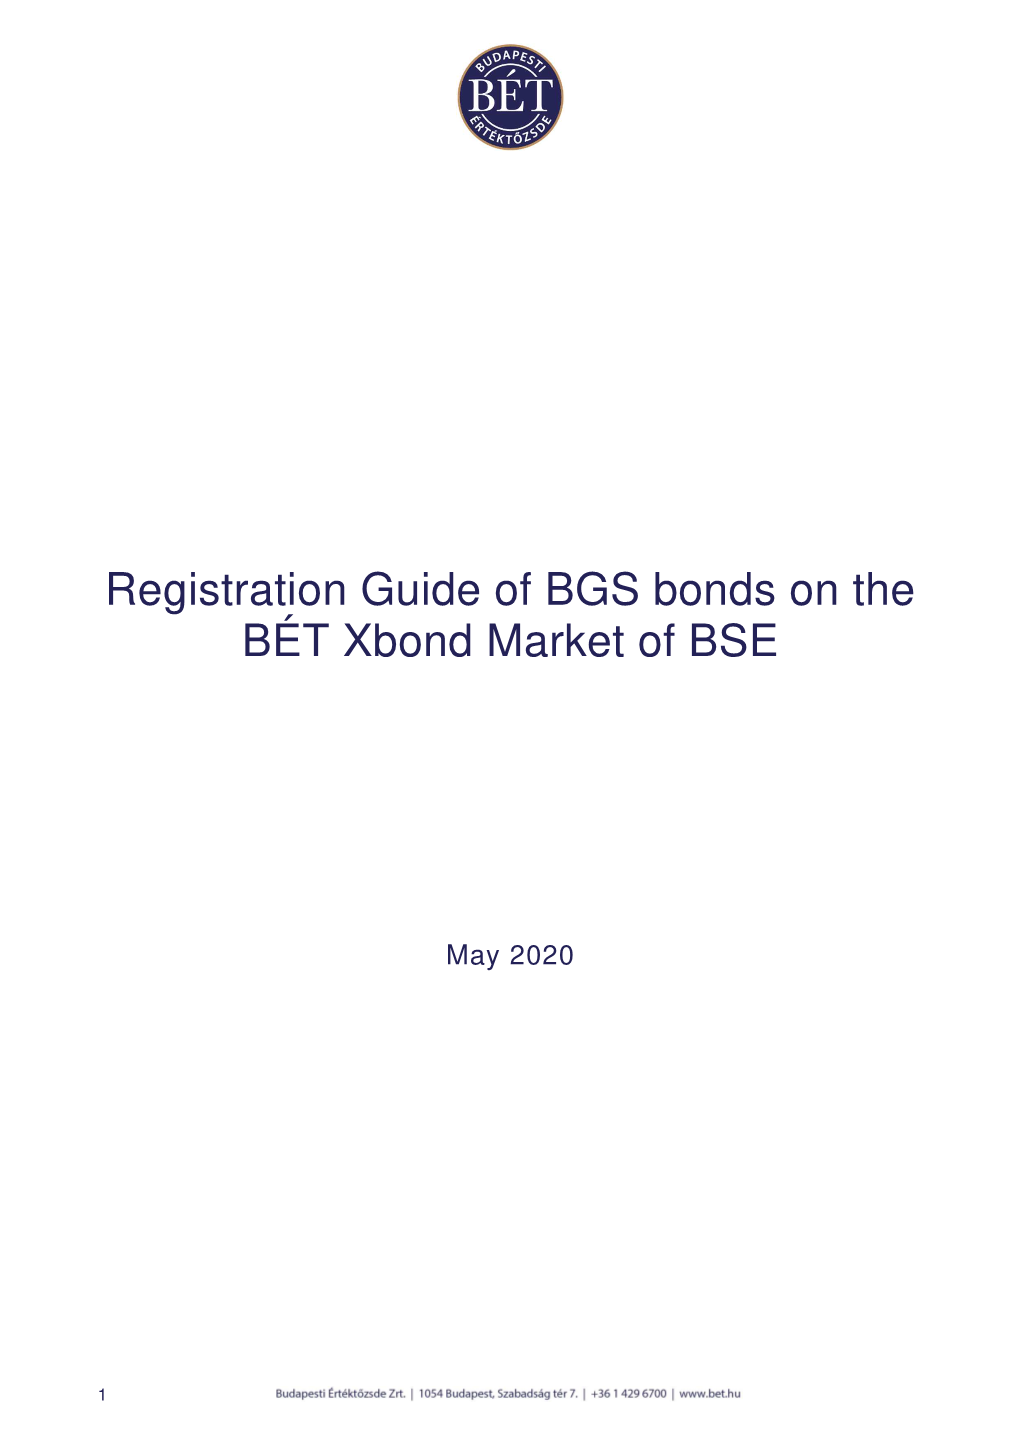 Registration Guide of BGS Bonds on the BÉT Xbond Market of BSE